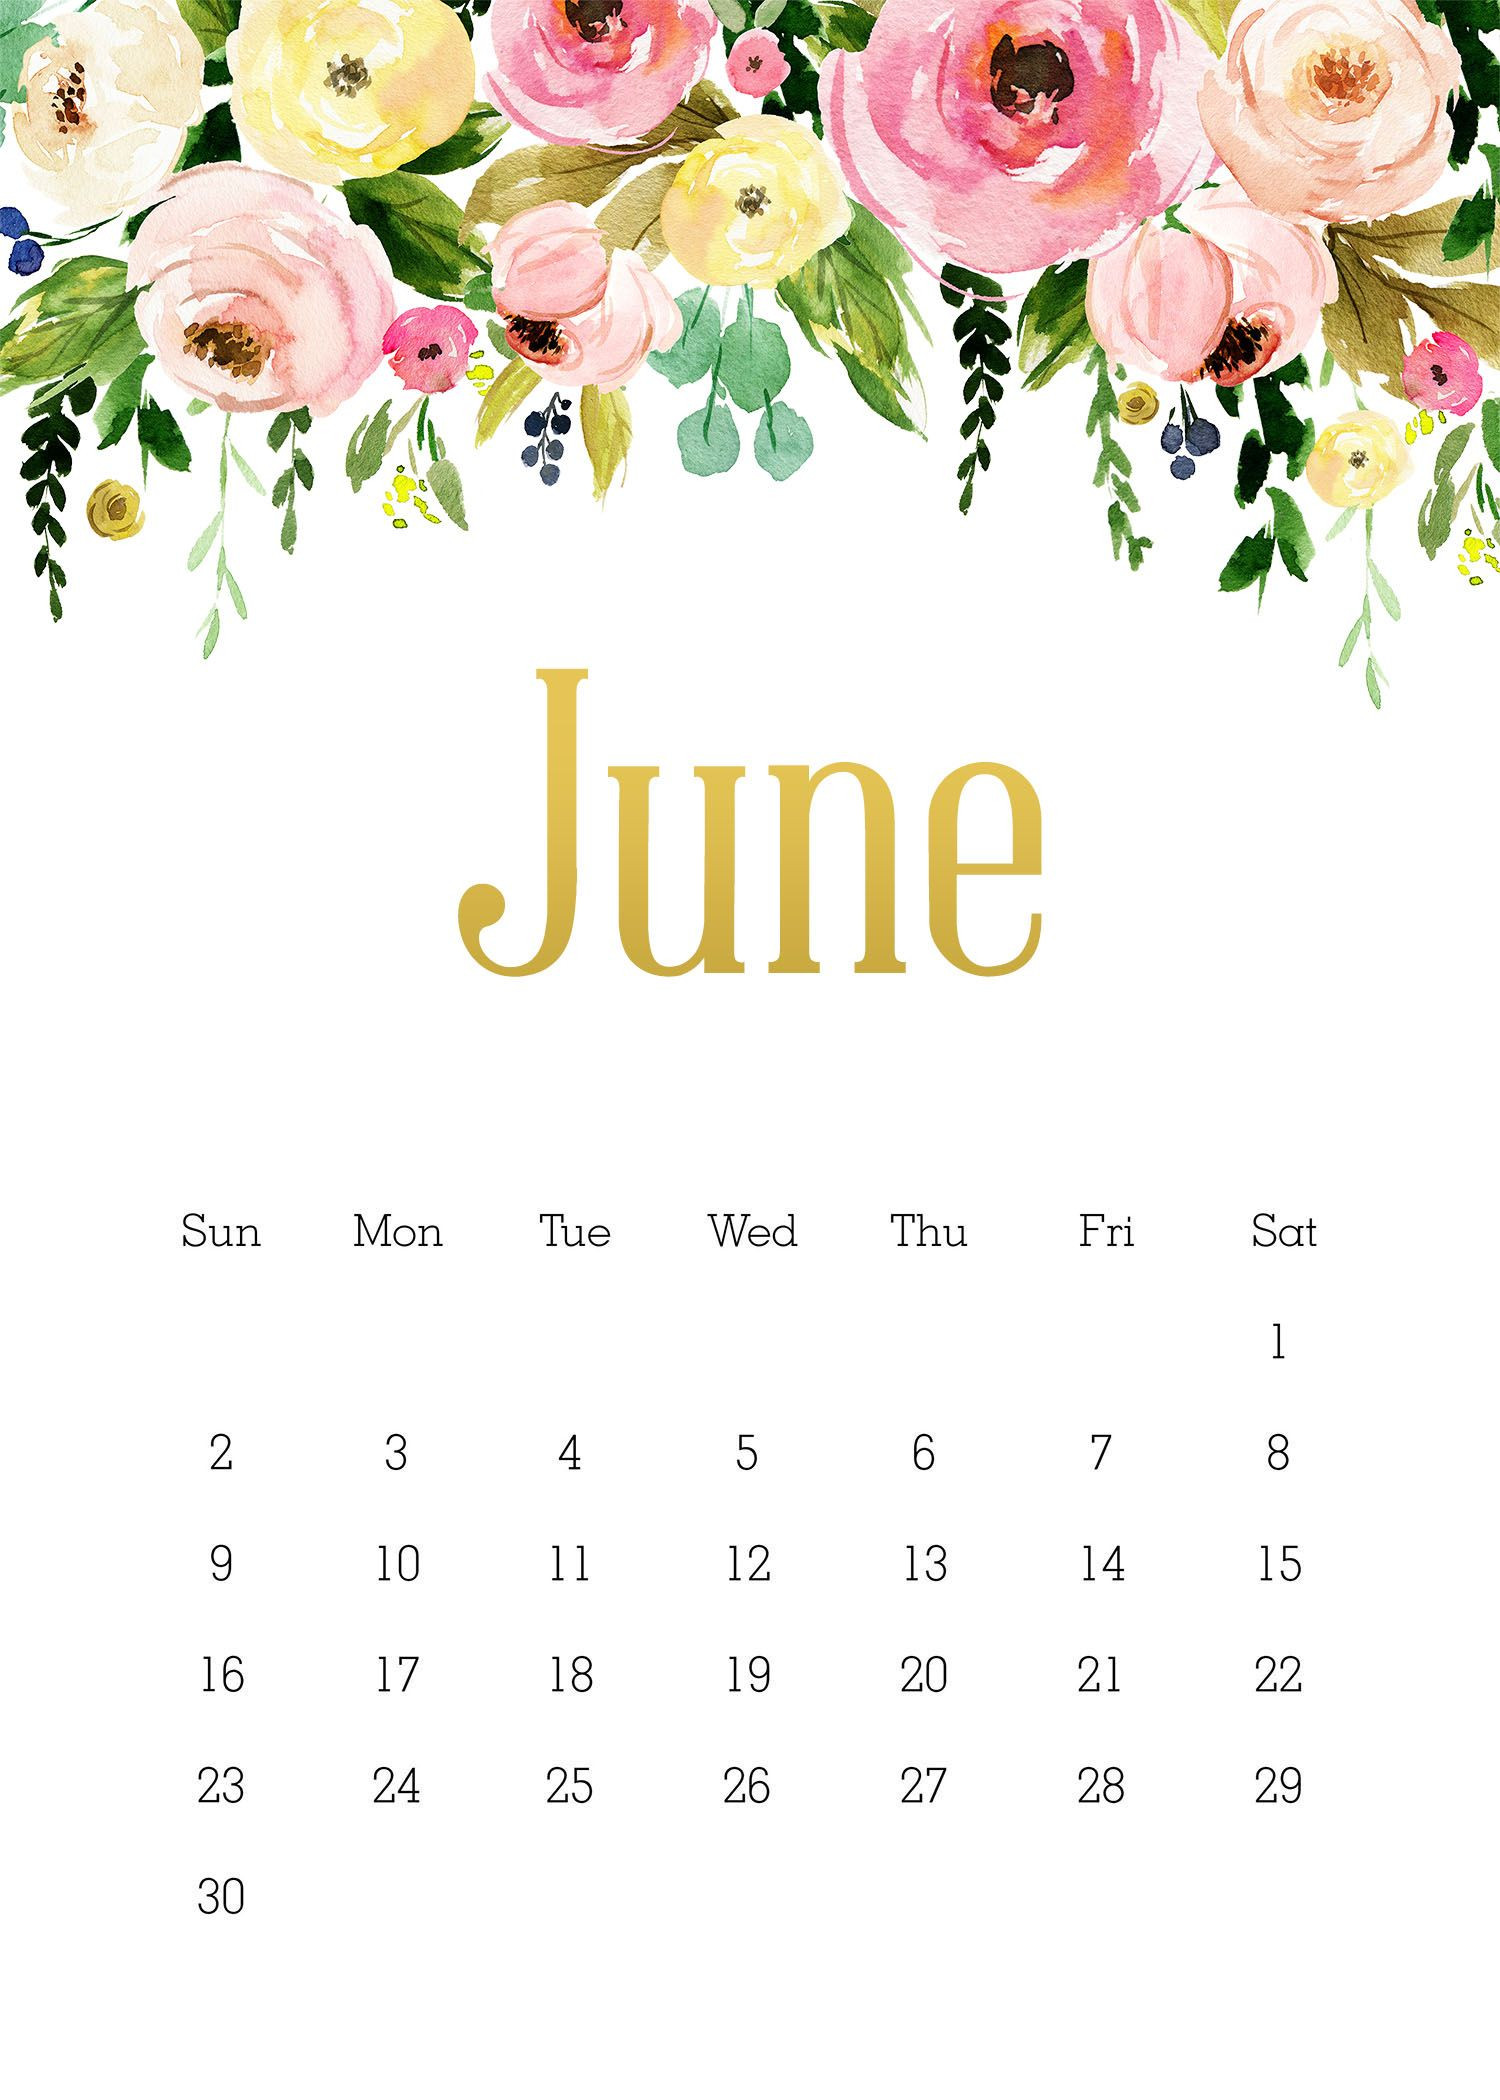 5x7 Calendar Template Free Free Printable 2019 5x7 Pretty Floral Calendar with